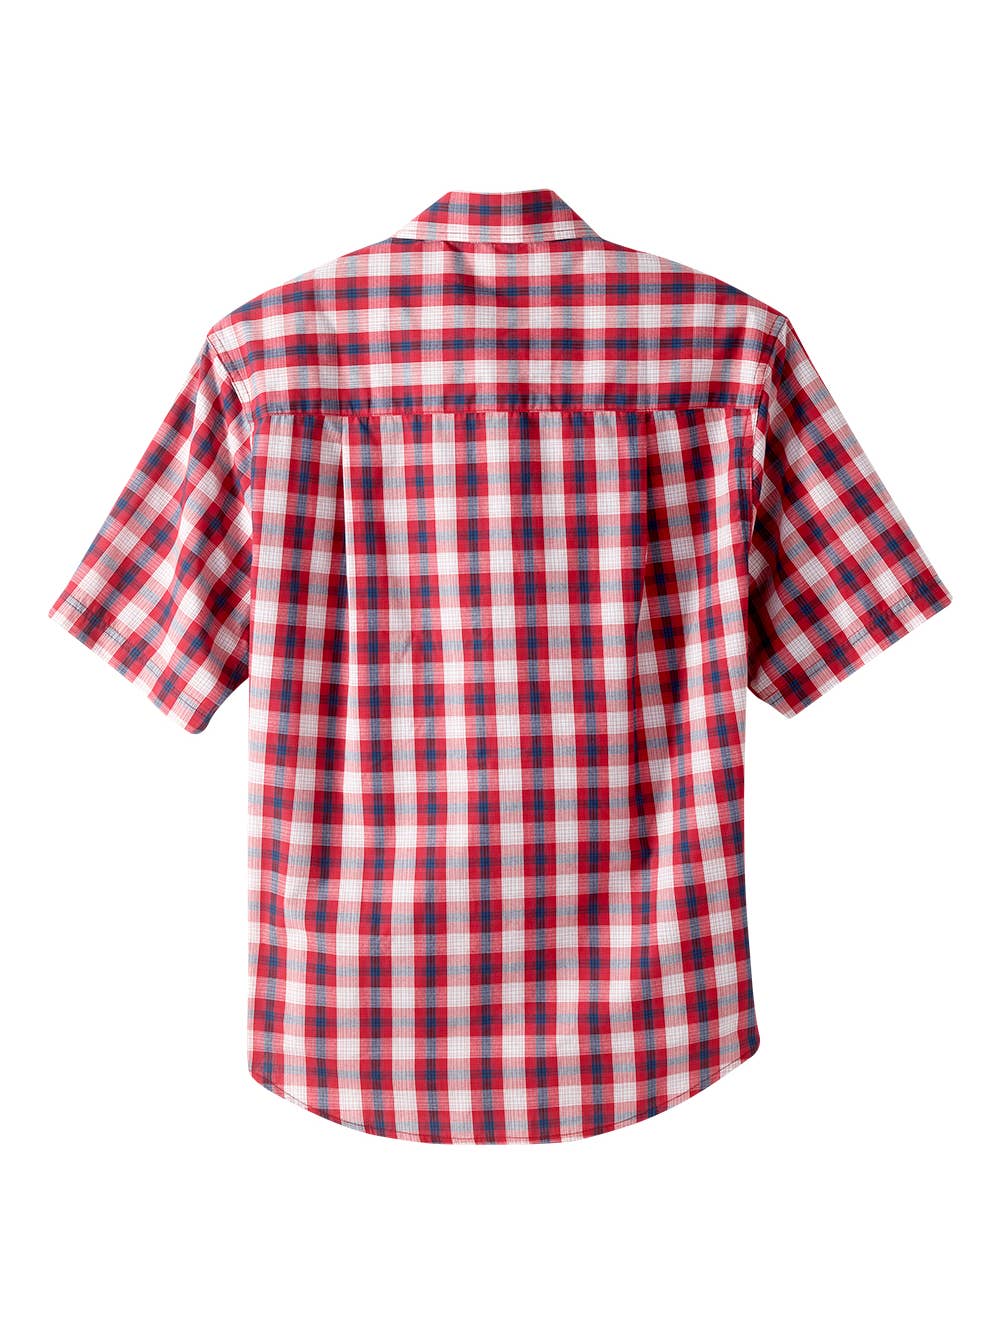 Men's Magnetic Button Short Sleeve Shirt